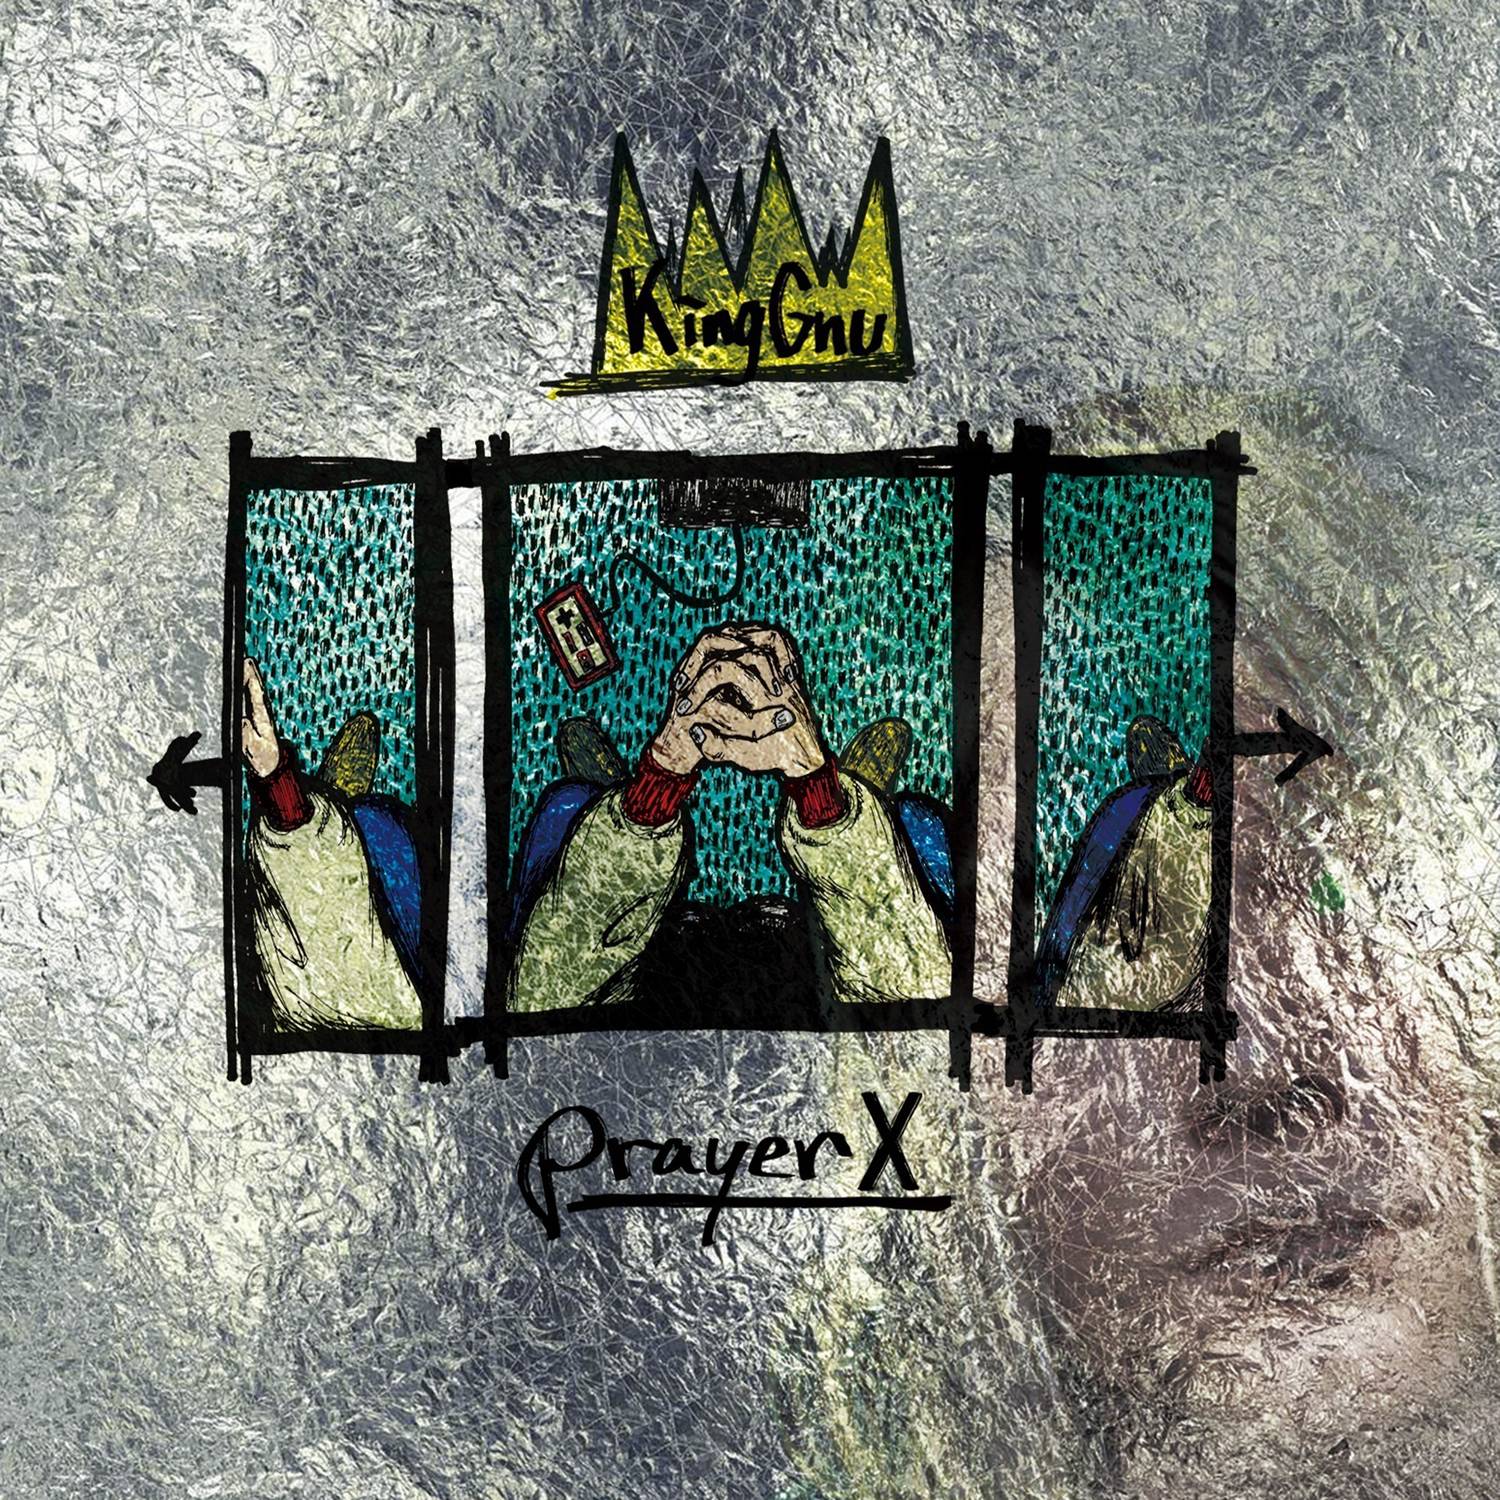 Prayer X - Osanime